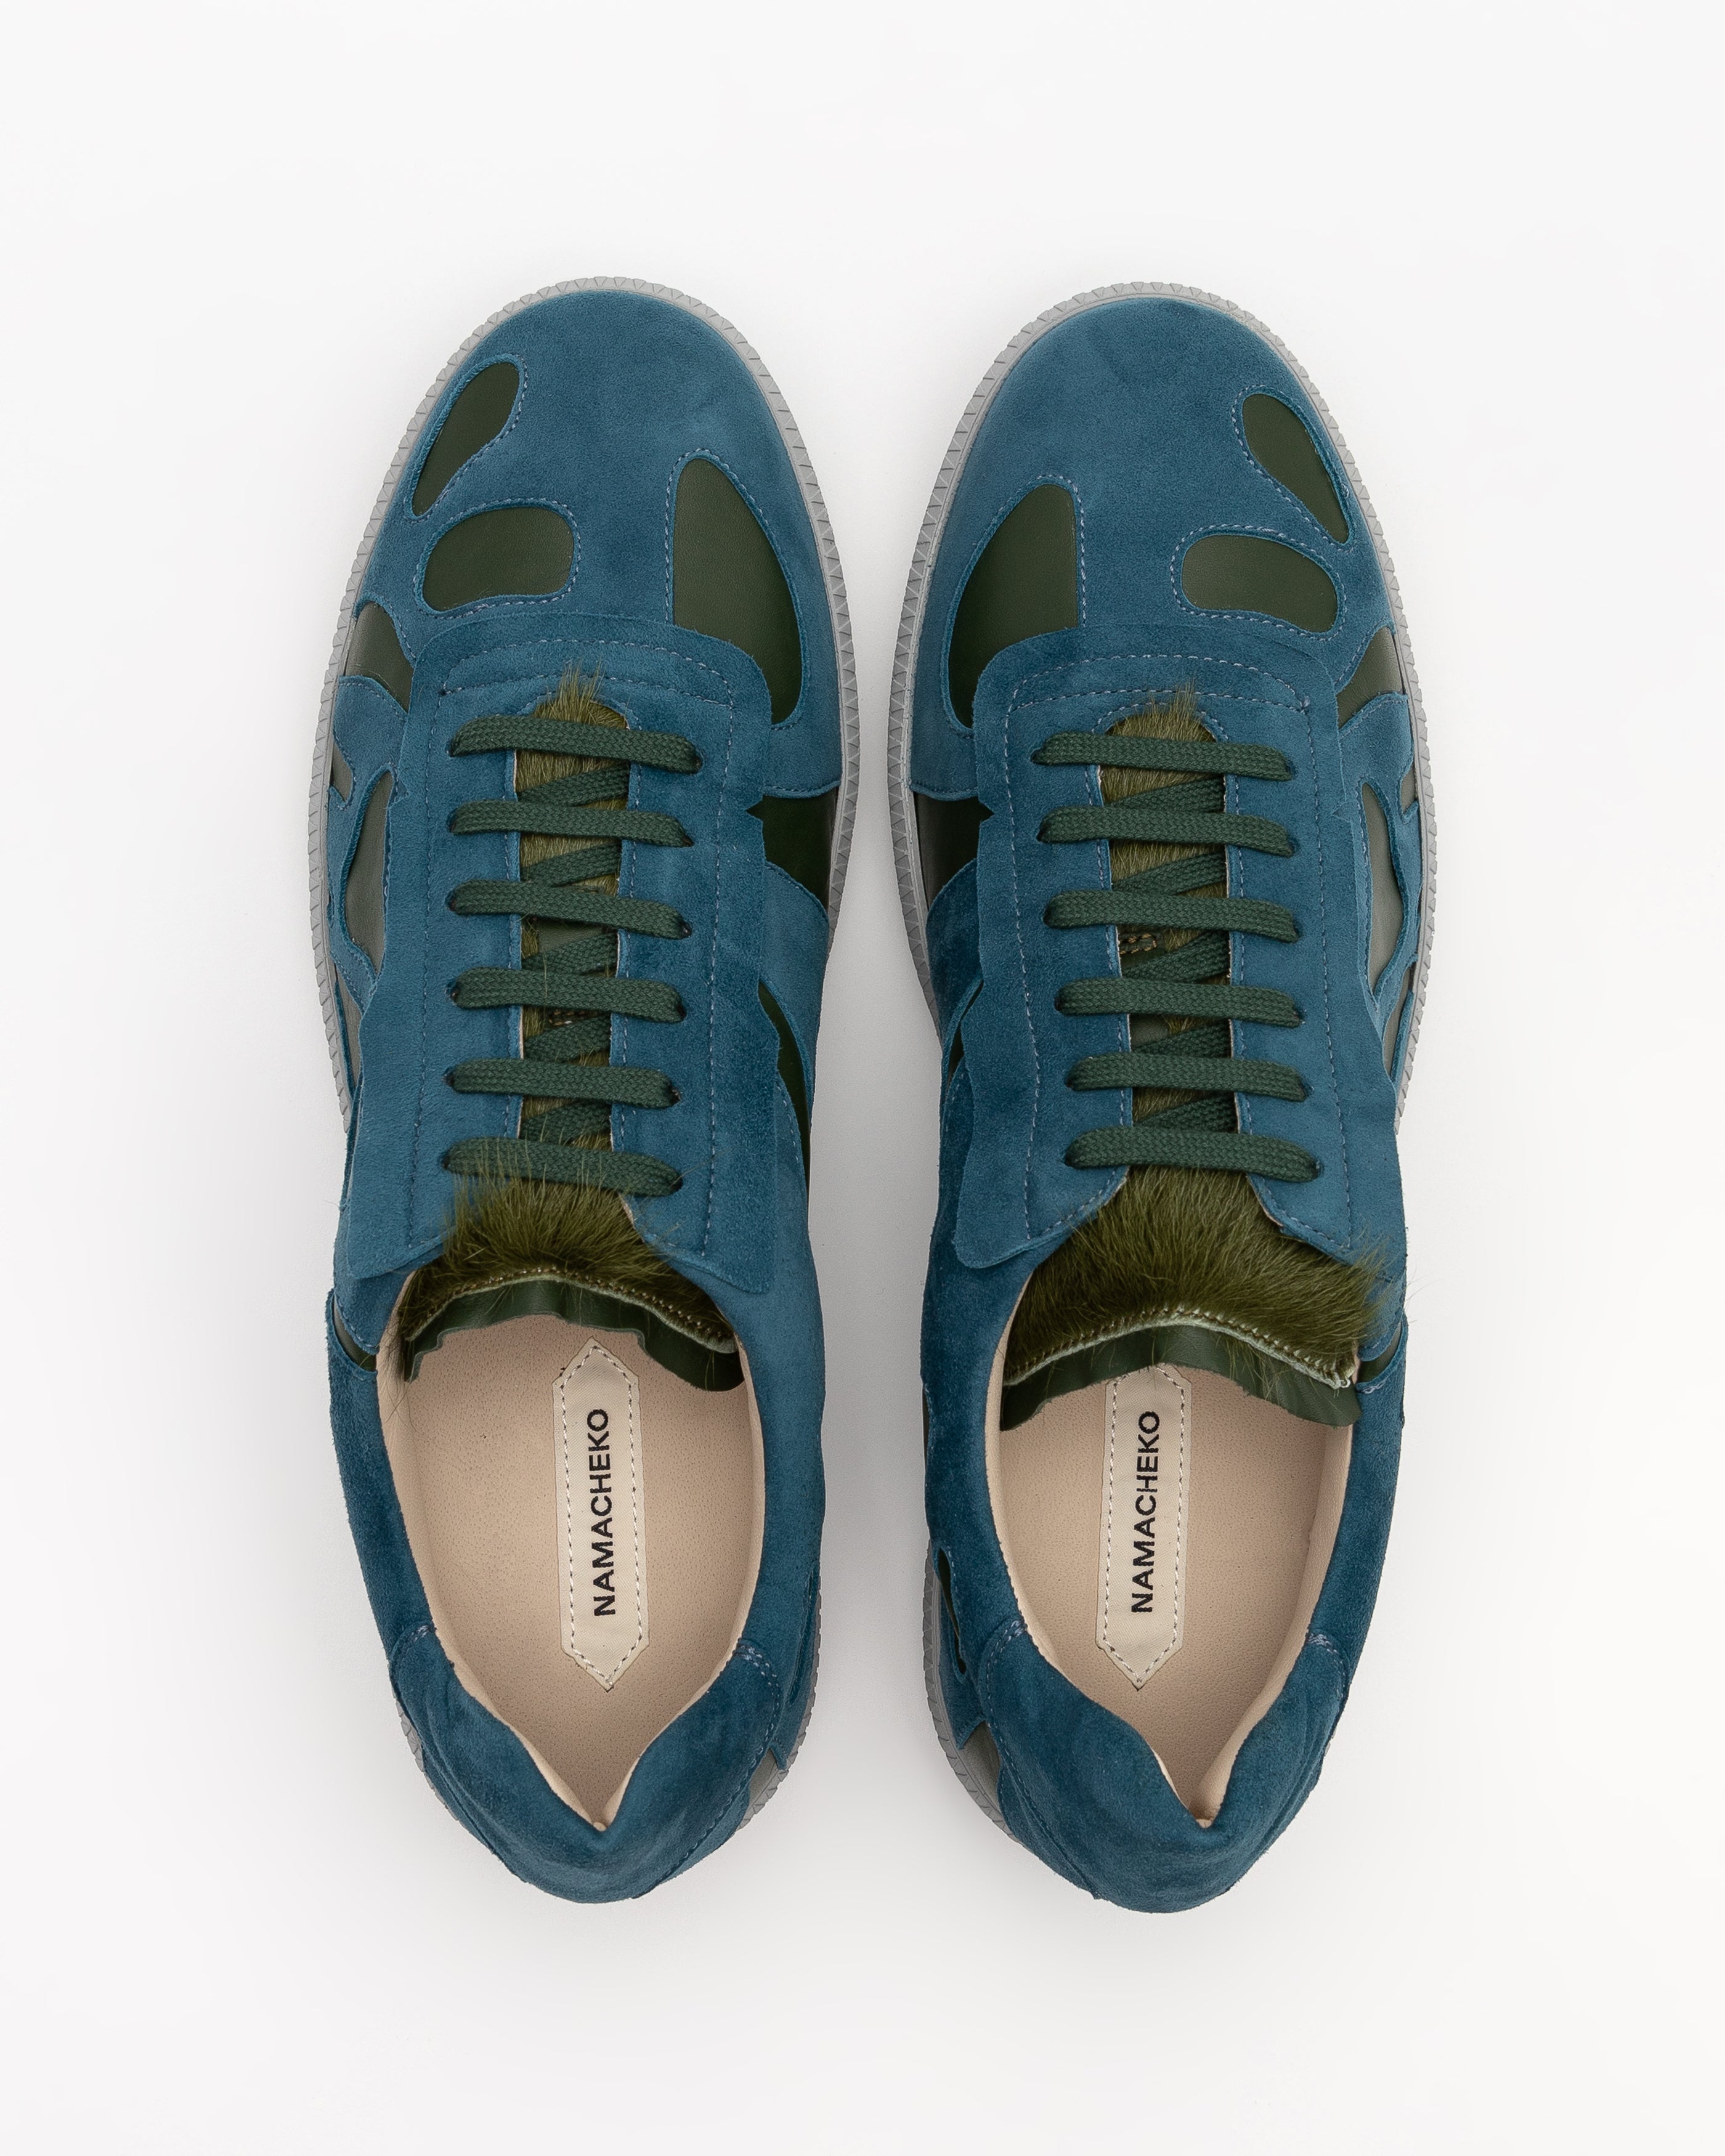 Murabi Sneakers in Sky Blue and Green